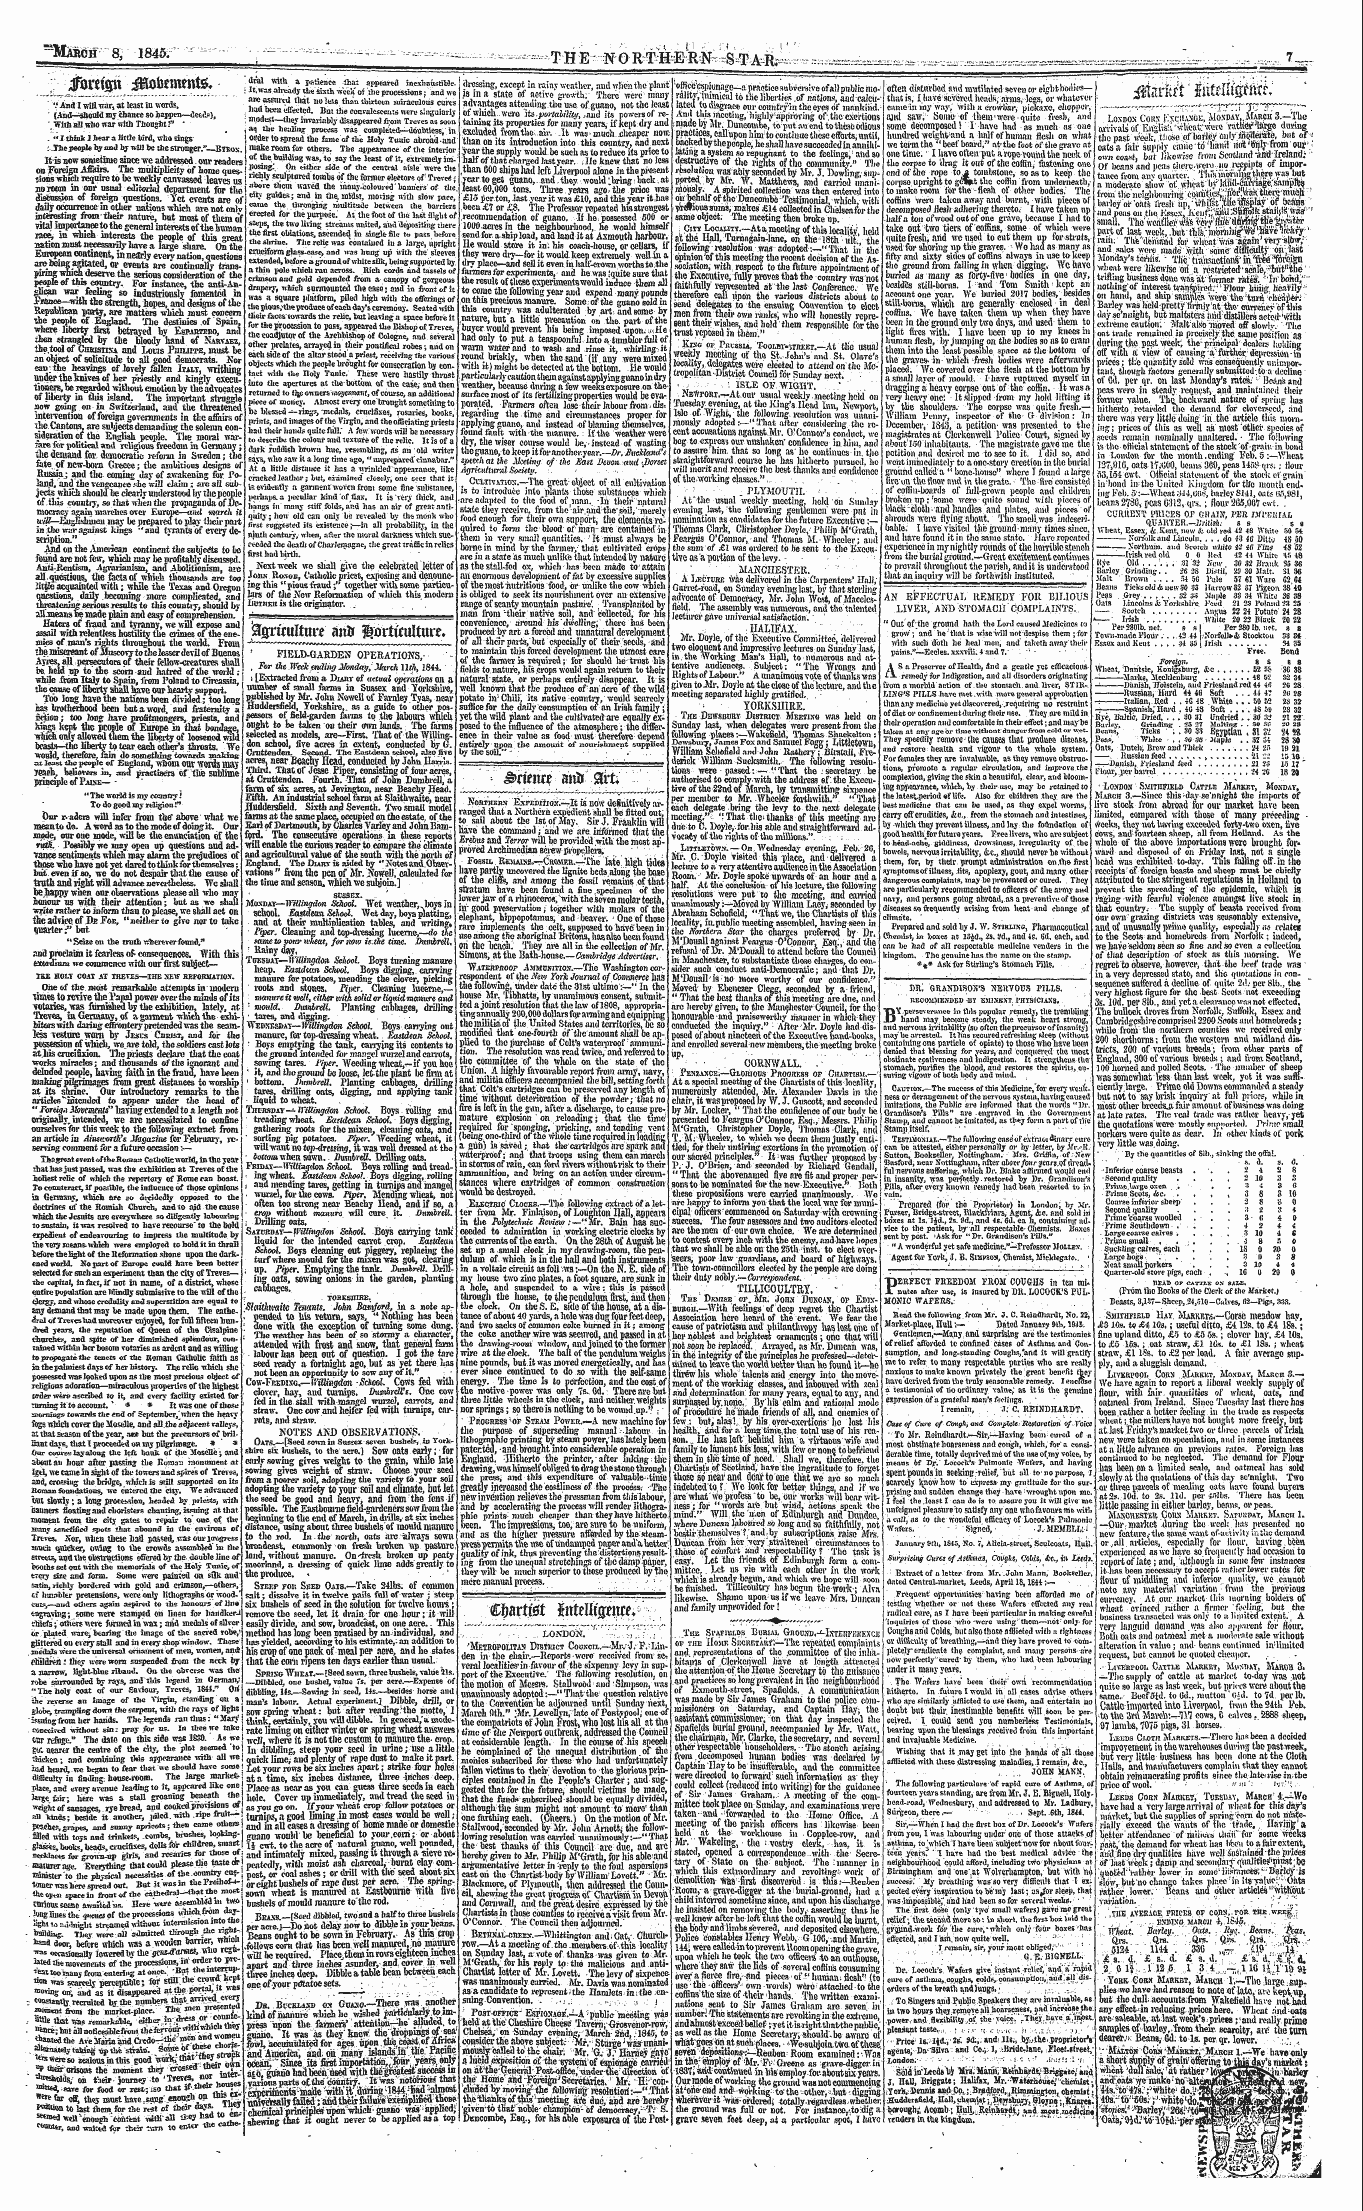 Northern Star (1837-1852): jS F Y, 3rd edition - March 8 3 L84o - ¦ — ; : '^''^ : -^~~ ^^...